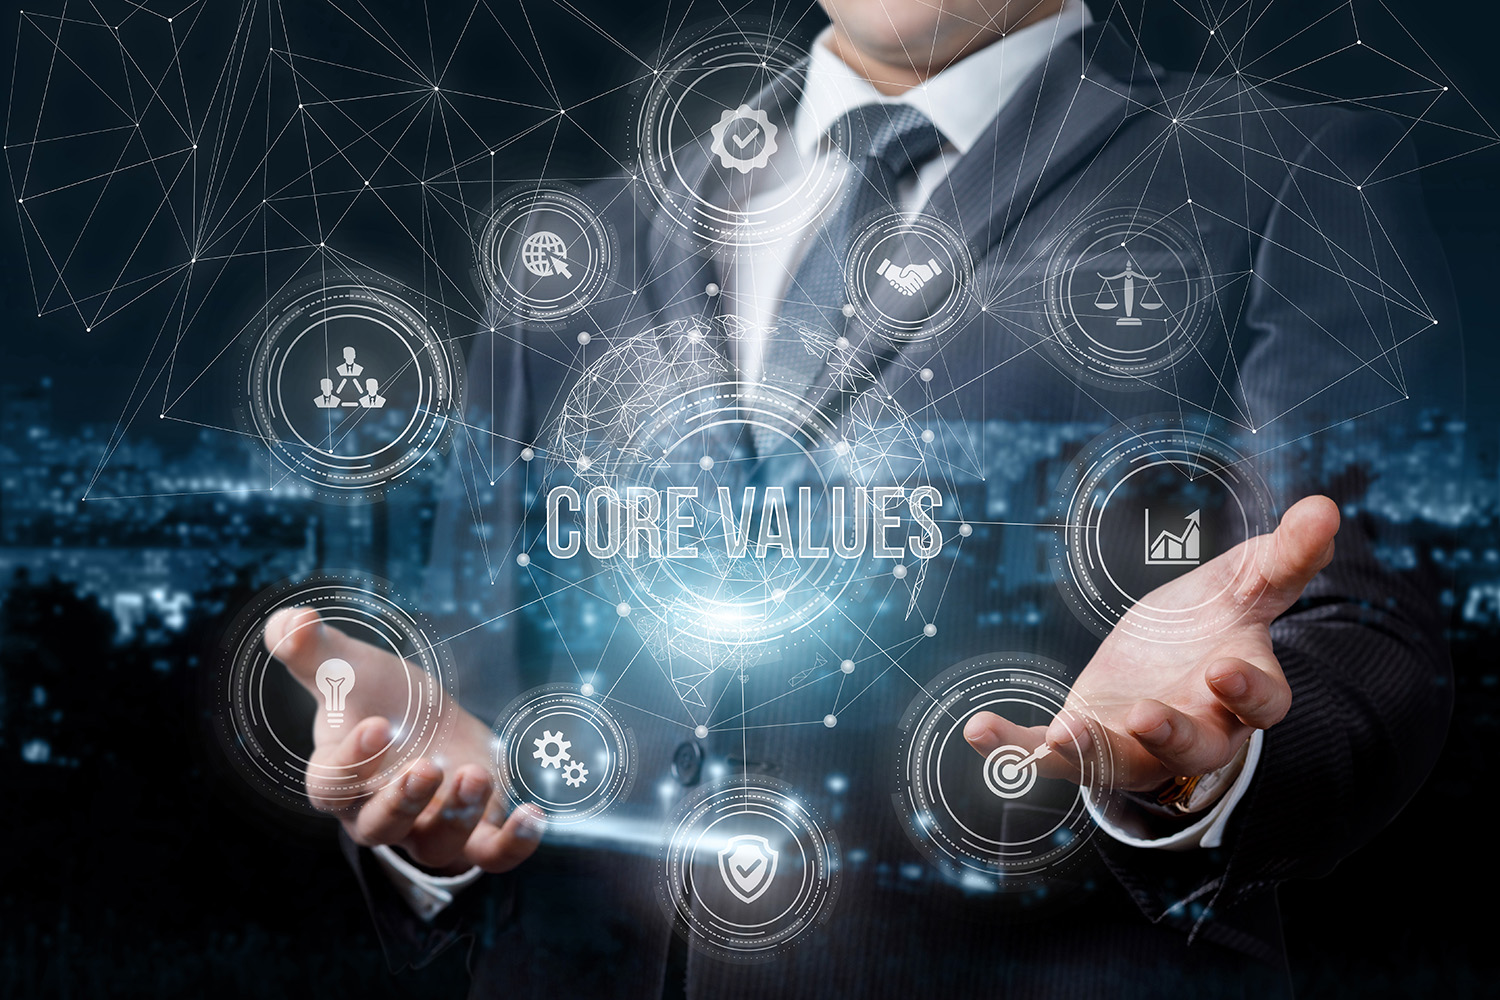 AdmitJet Core Values Sustainability Innovation Performance